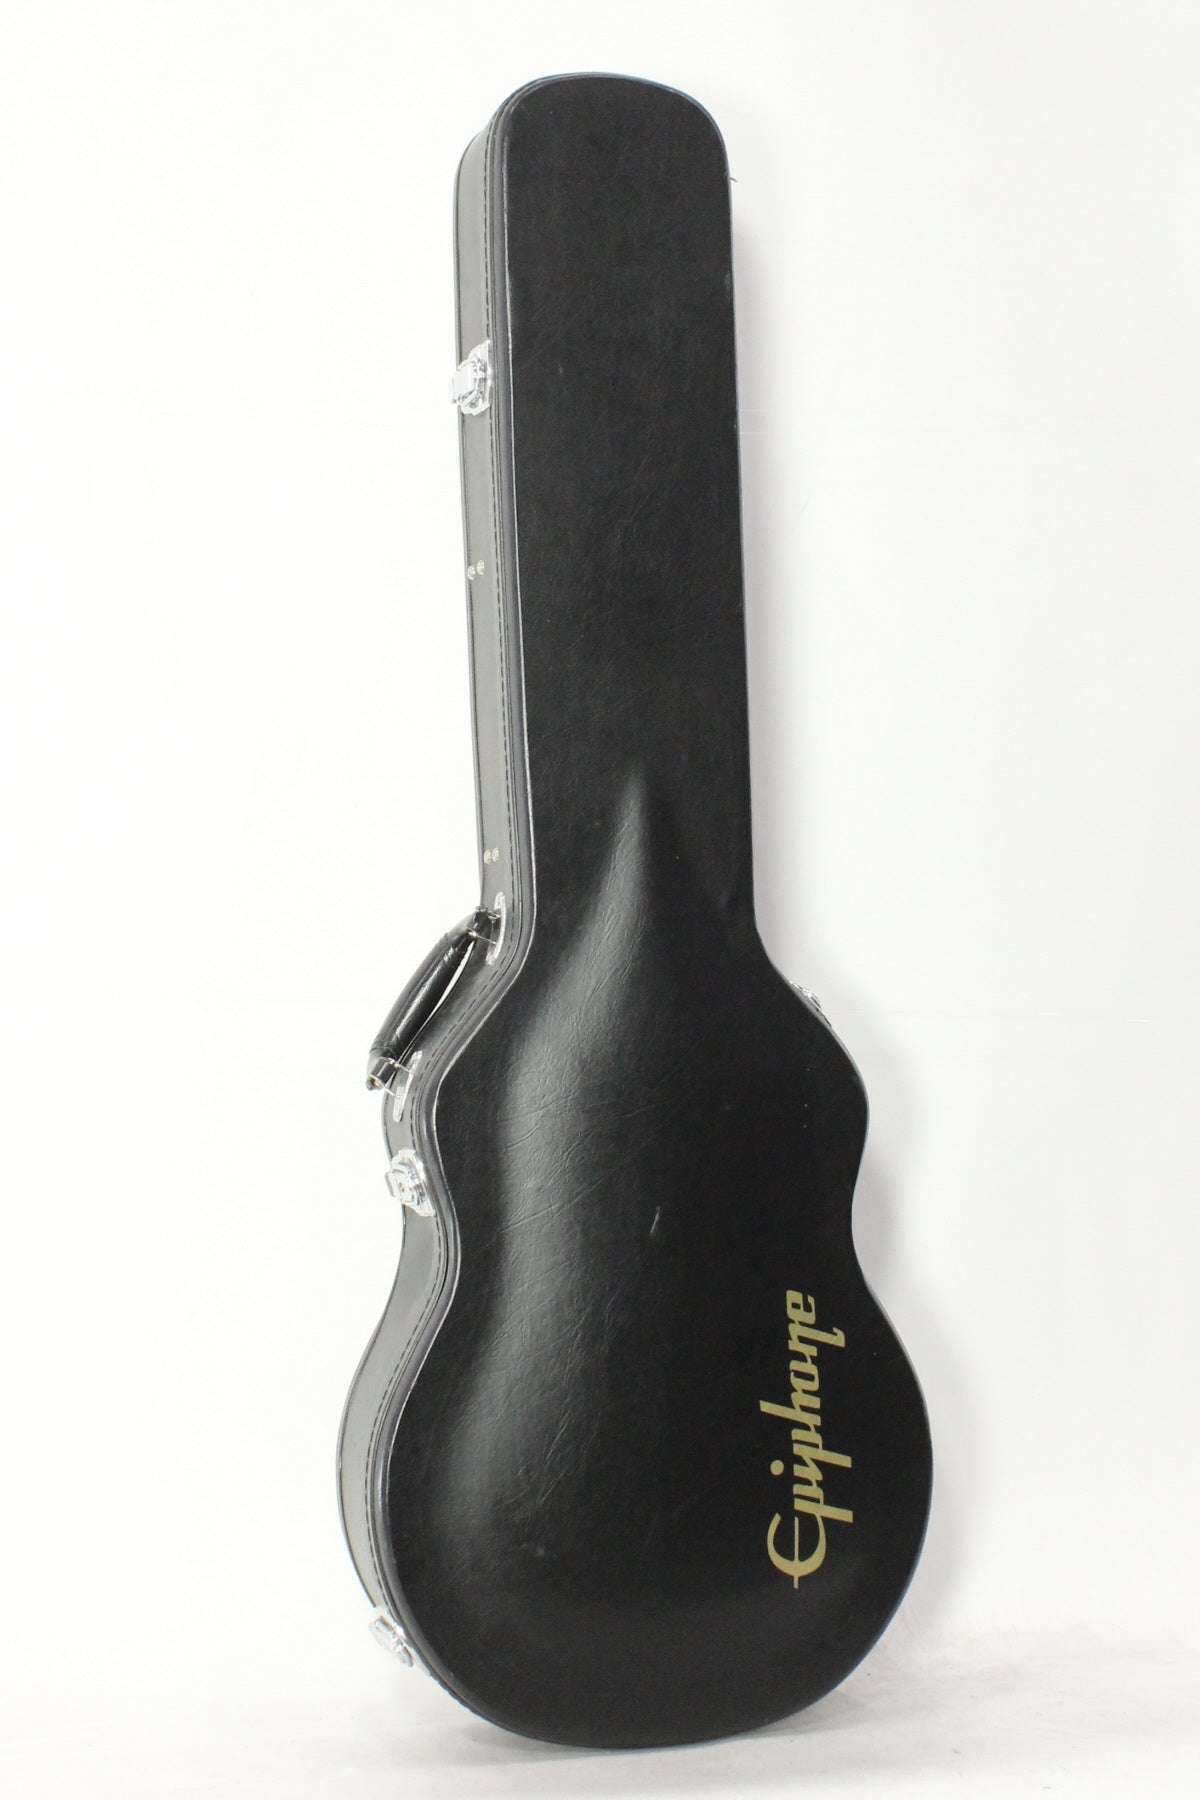 [SN 14082301001] USED Epiphone / Limited Edition Lee Malia Signature Les Paul Custom 2014 [10]